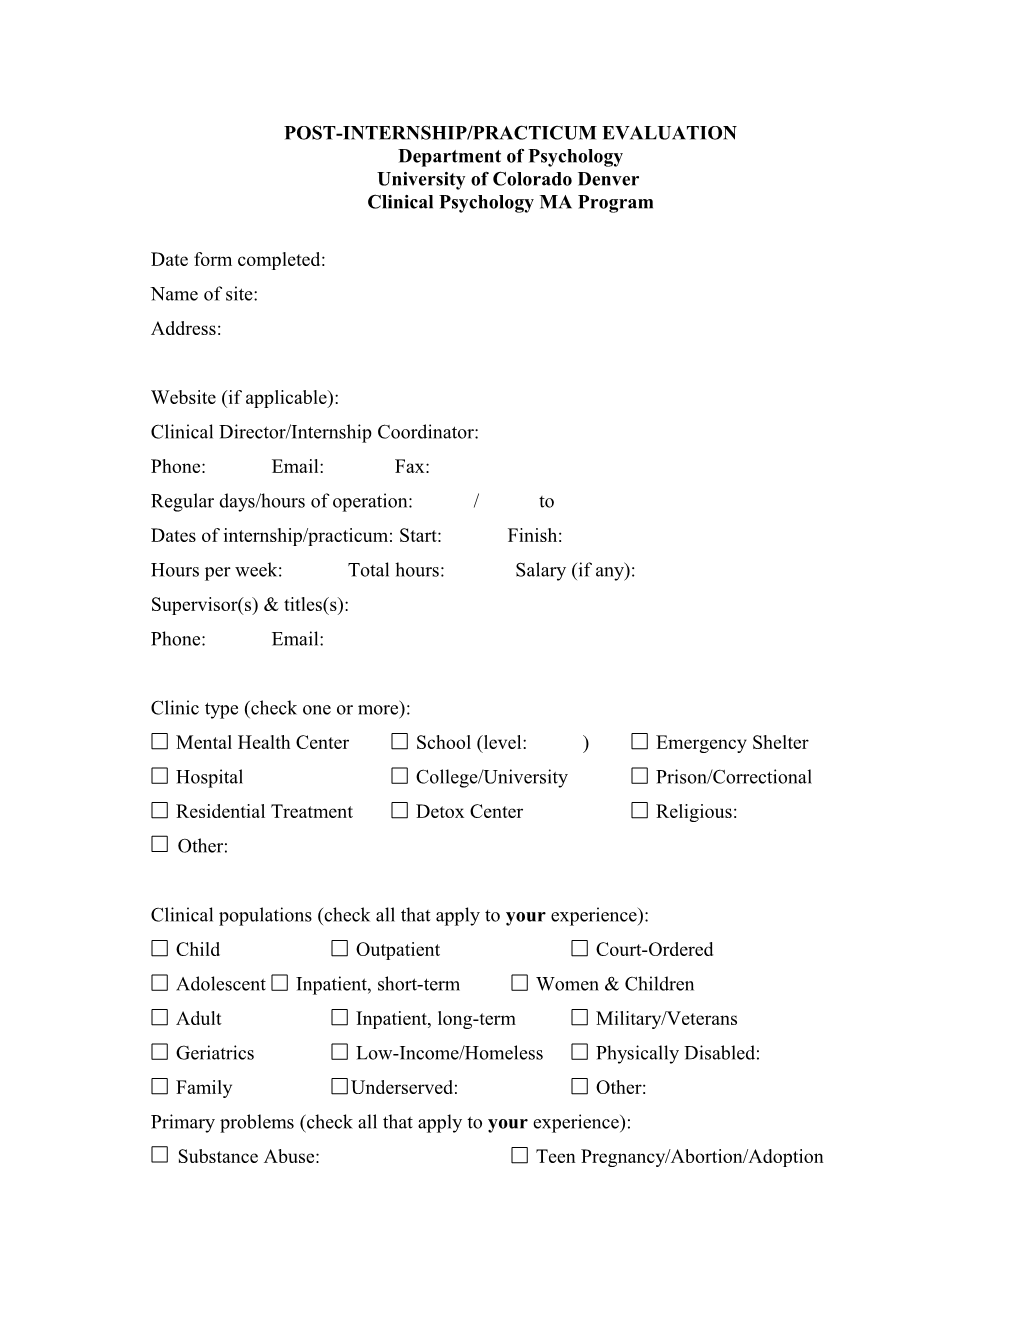 Post-Internship Questionnaire